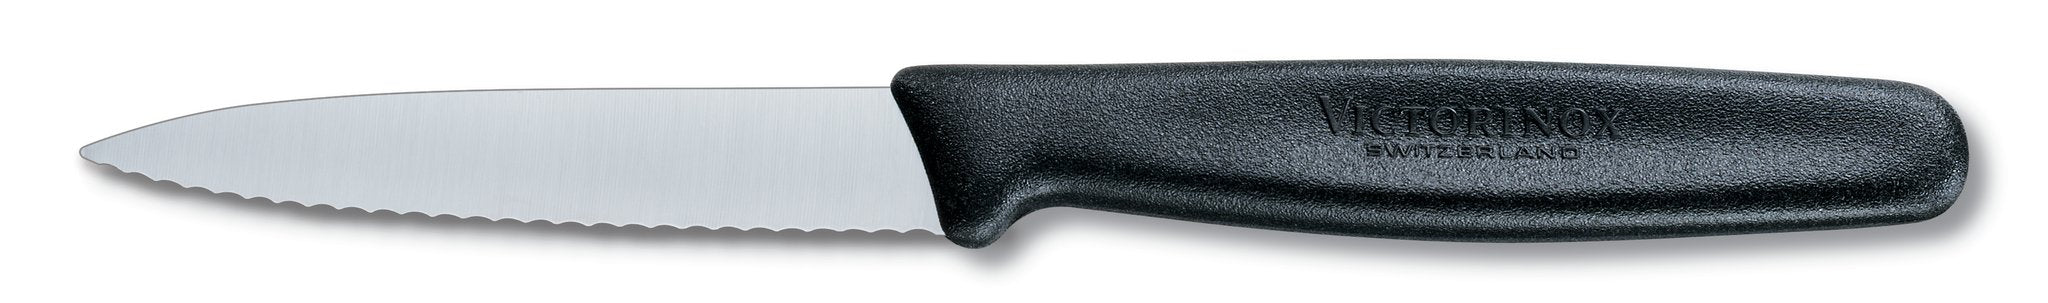 Victorinox 10cm Serrated Edge Veg Knife, Black, Red